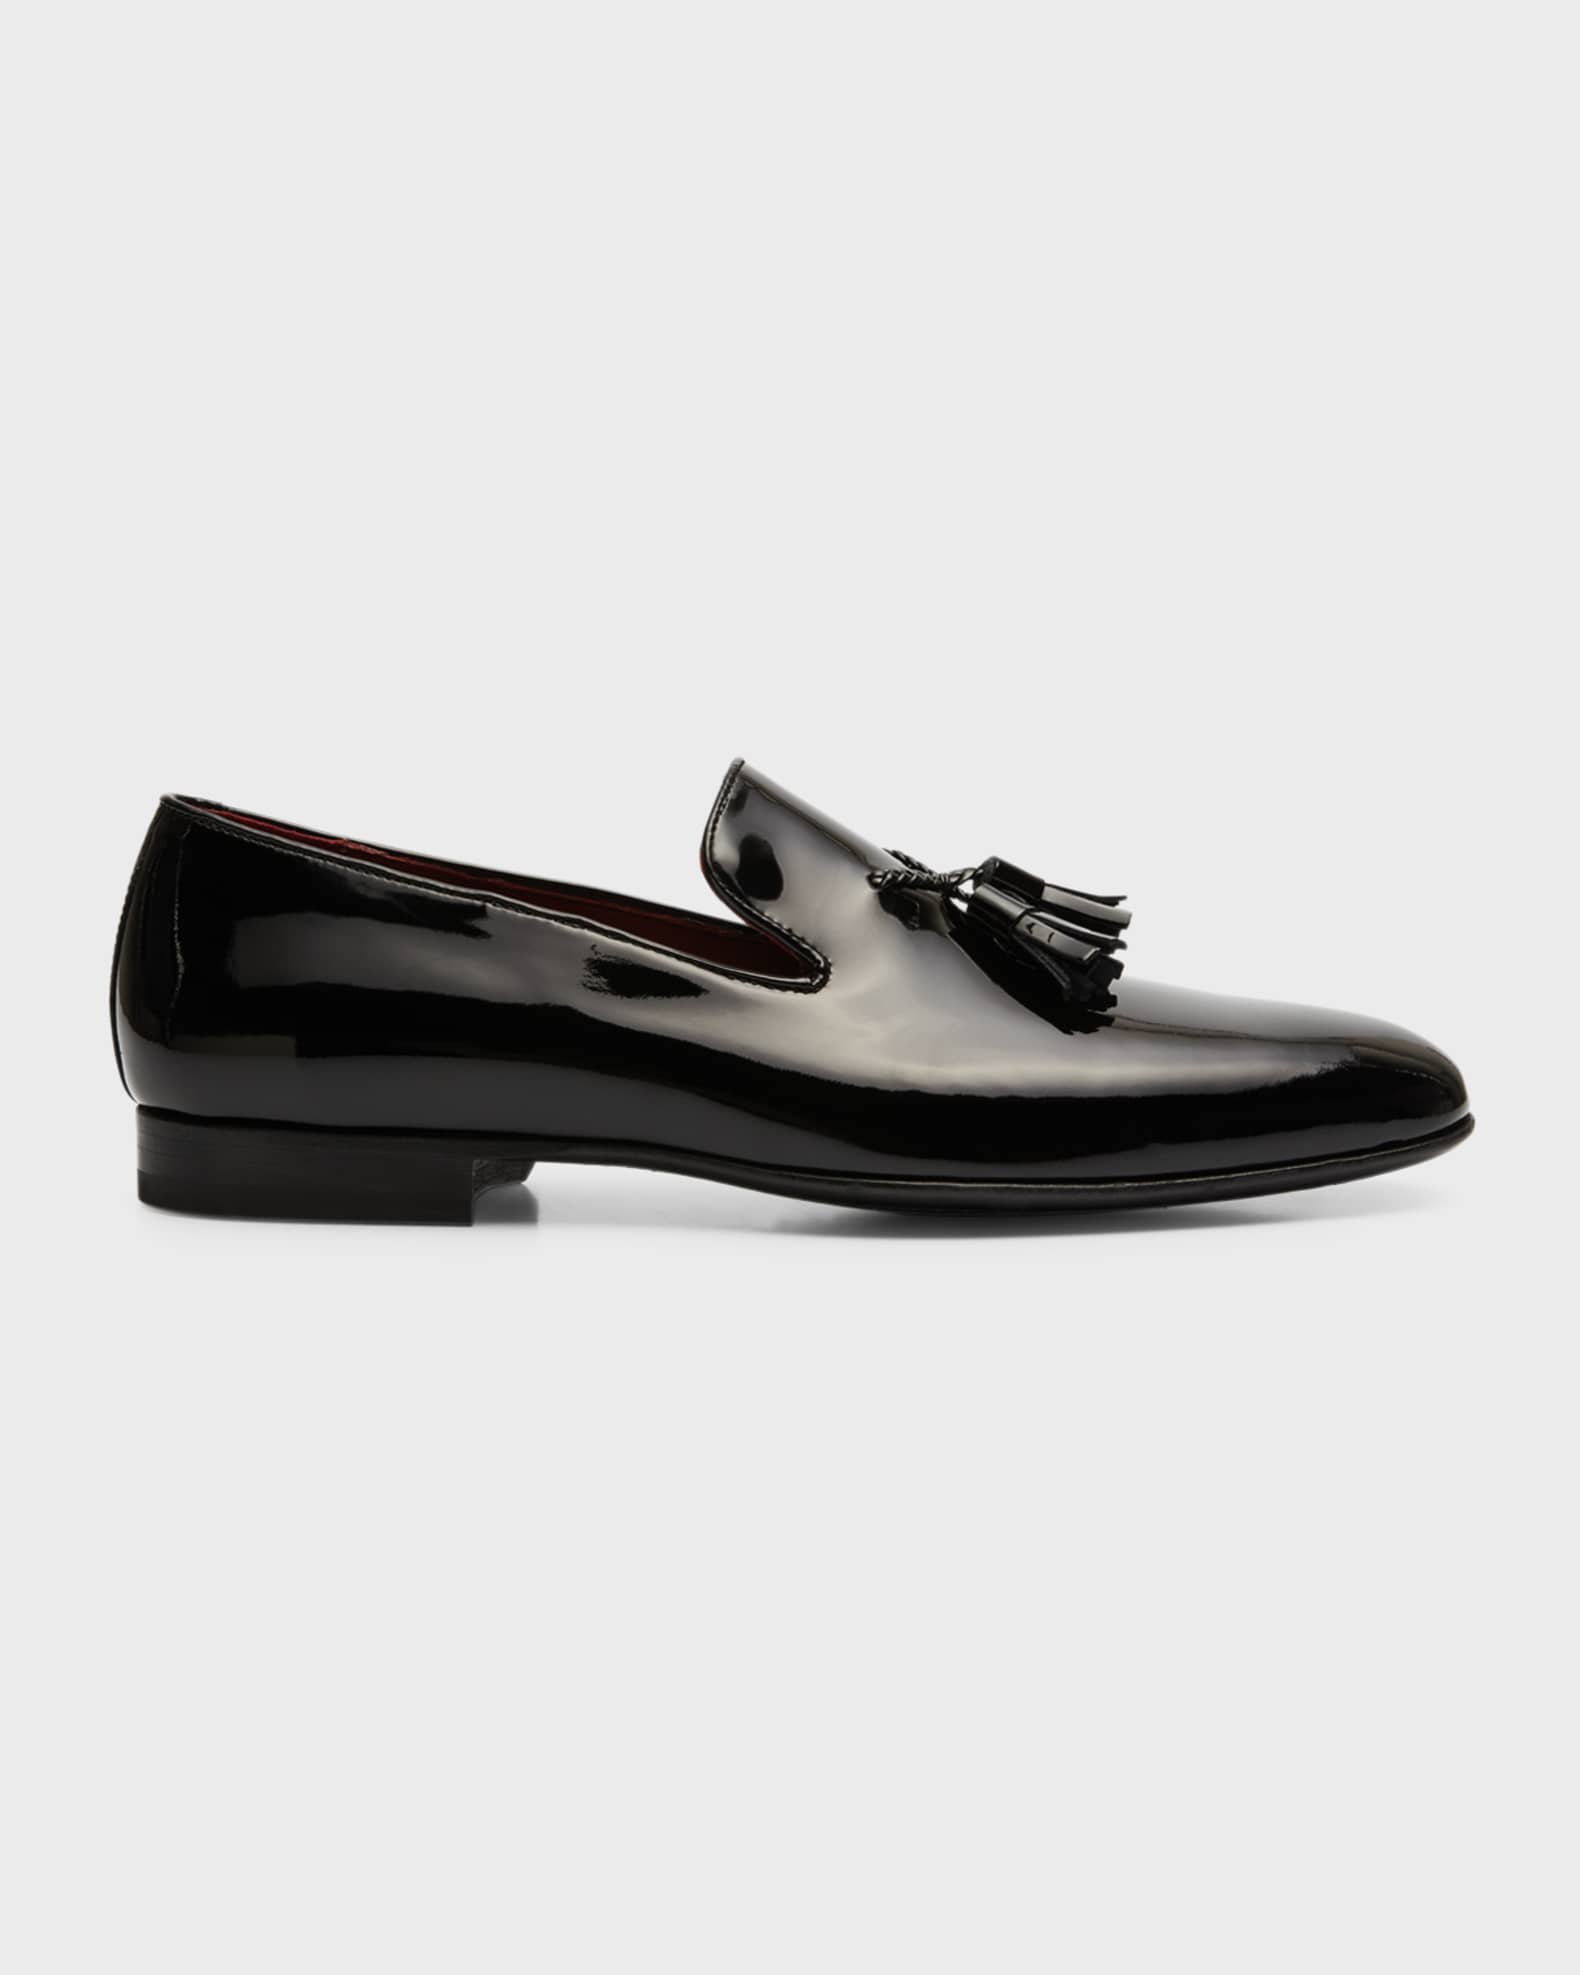 Magnanni Men's Patent Leather Tassel Loafers | Neiman Marcus